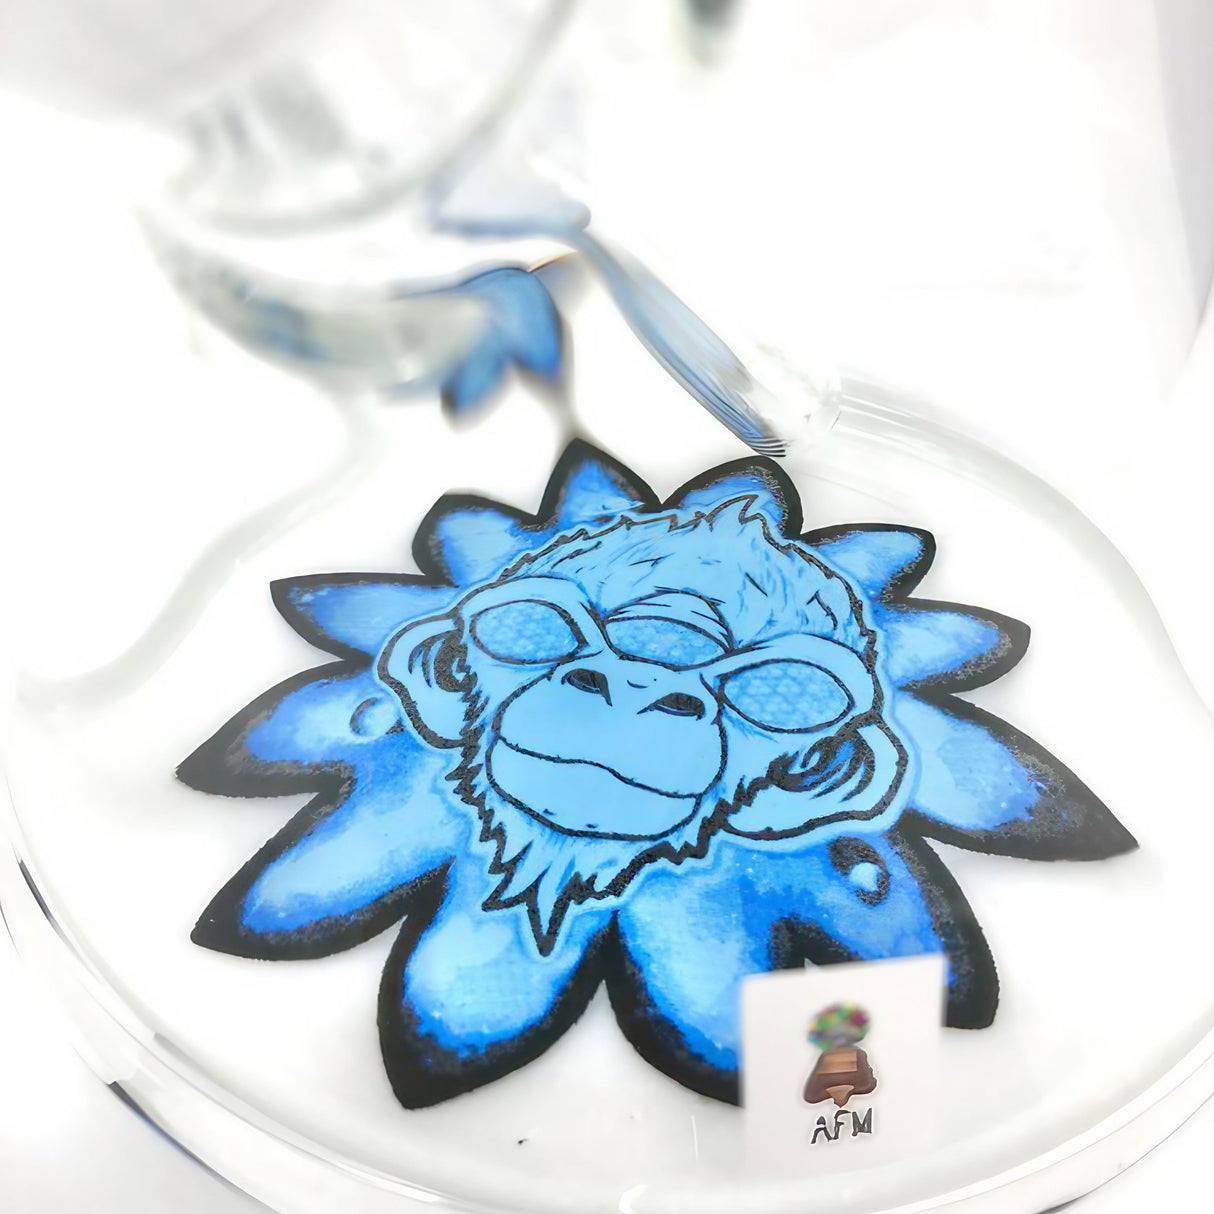 Close-up of AFM Glass Flower Monkey 9mm Beaker's base with intricate blue monkey design